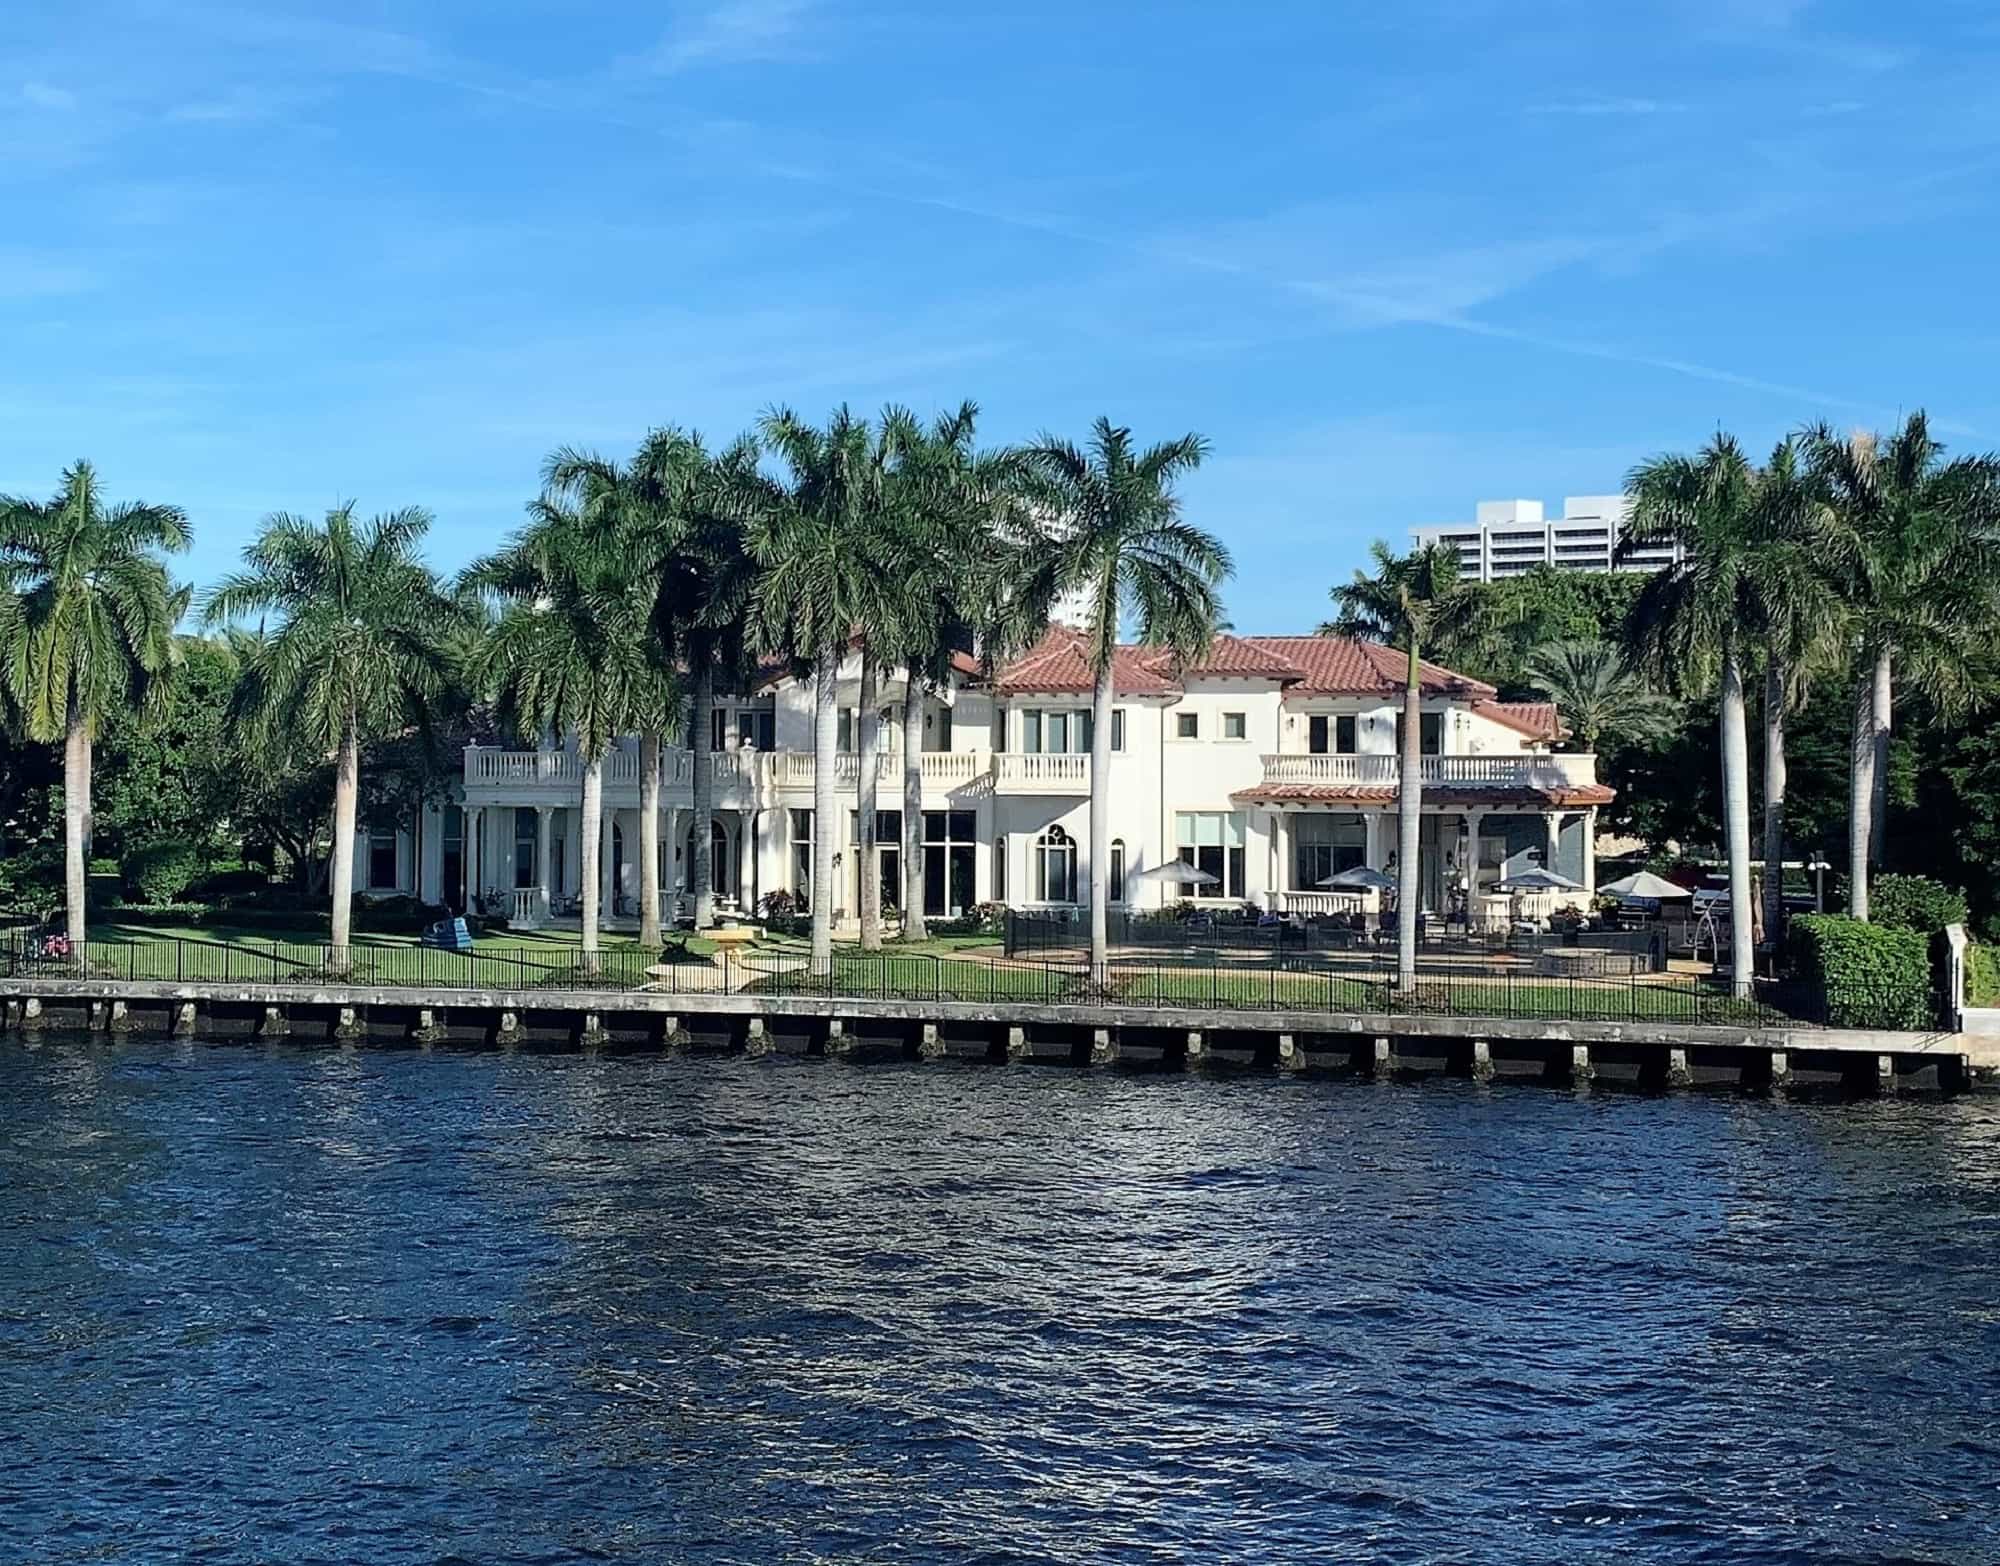 Royal Palm Yacht Country Club Waterfront Homes - Luxury Resort Portfolio